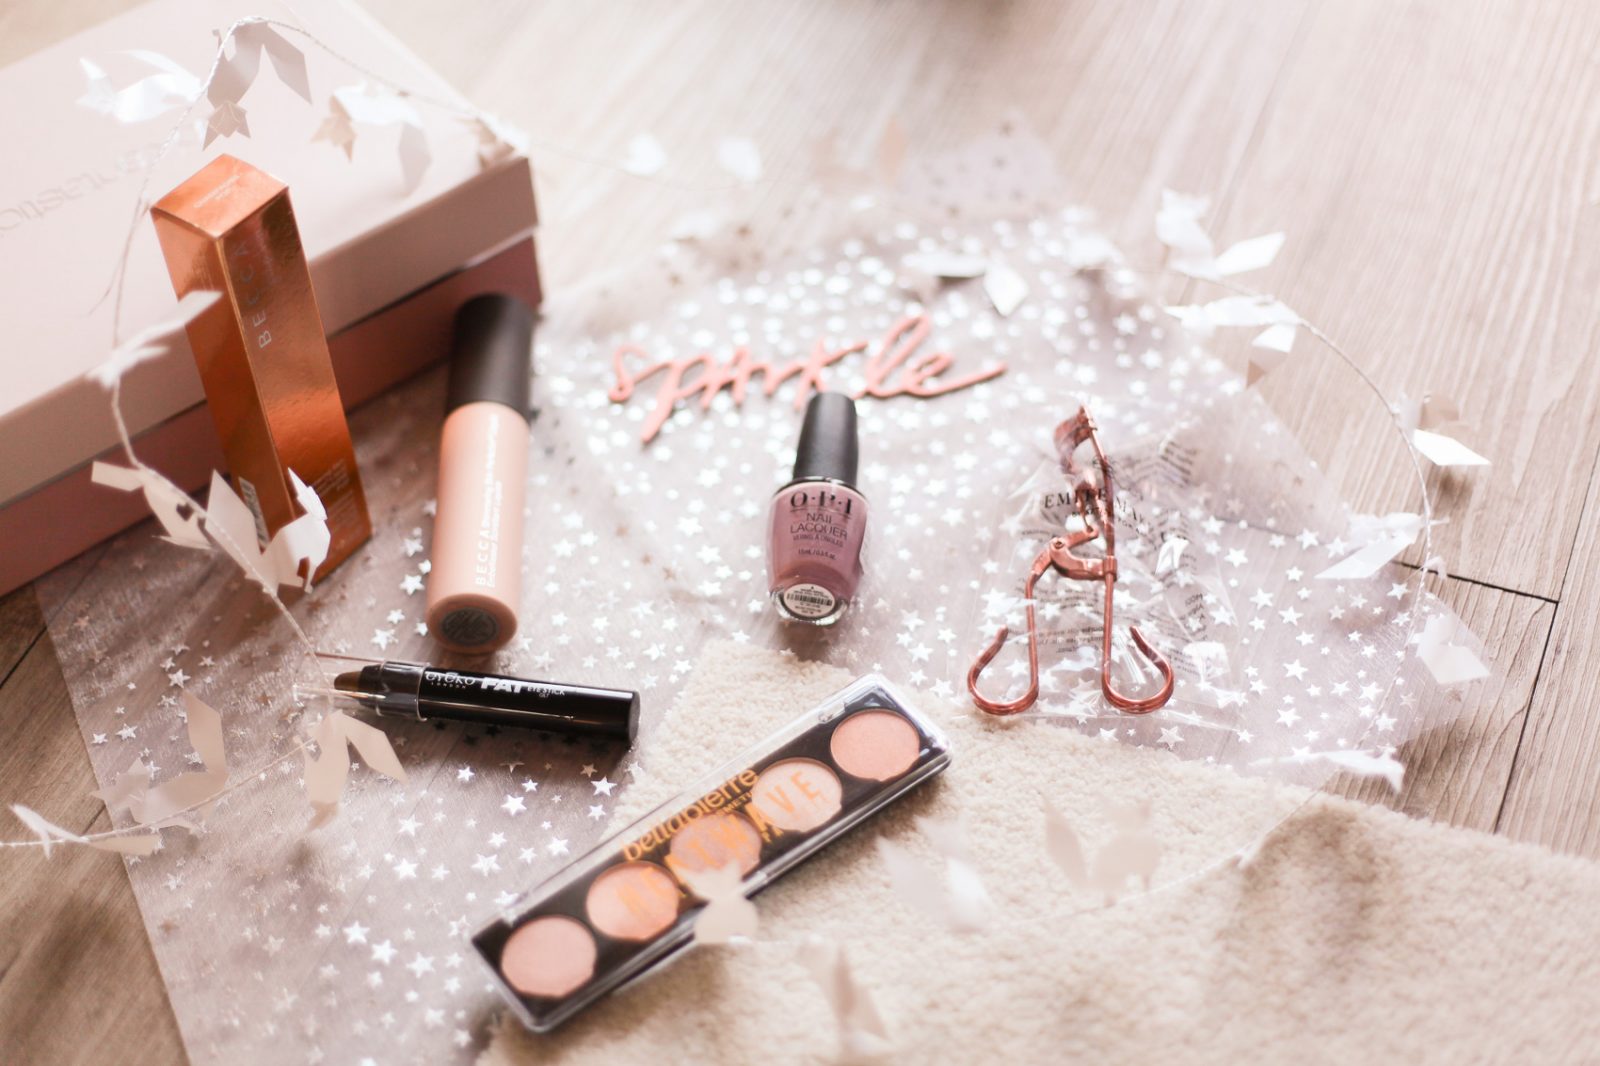 DIY Beauty & Skincare Advent Calendar